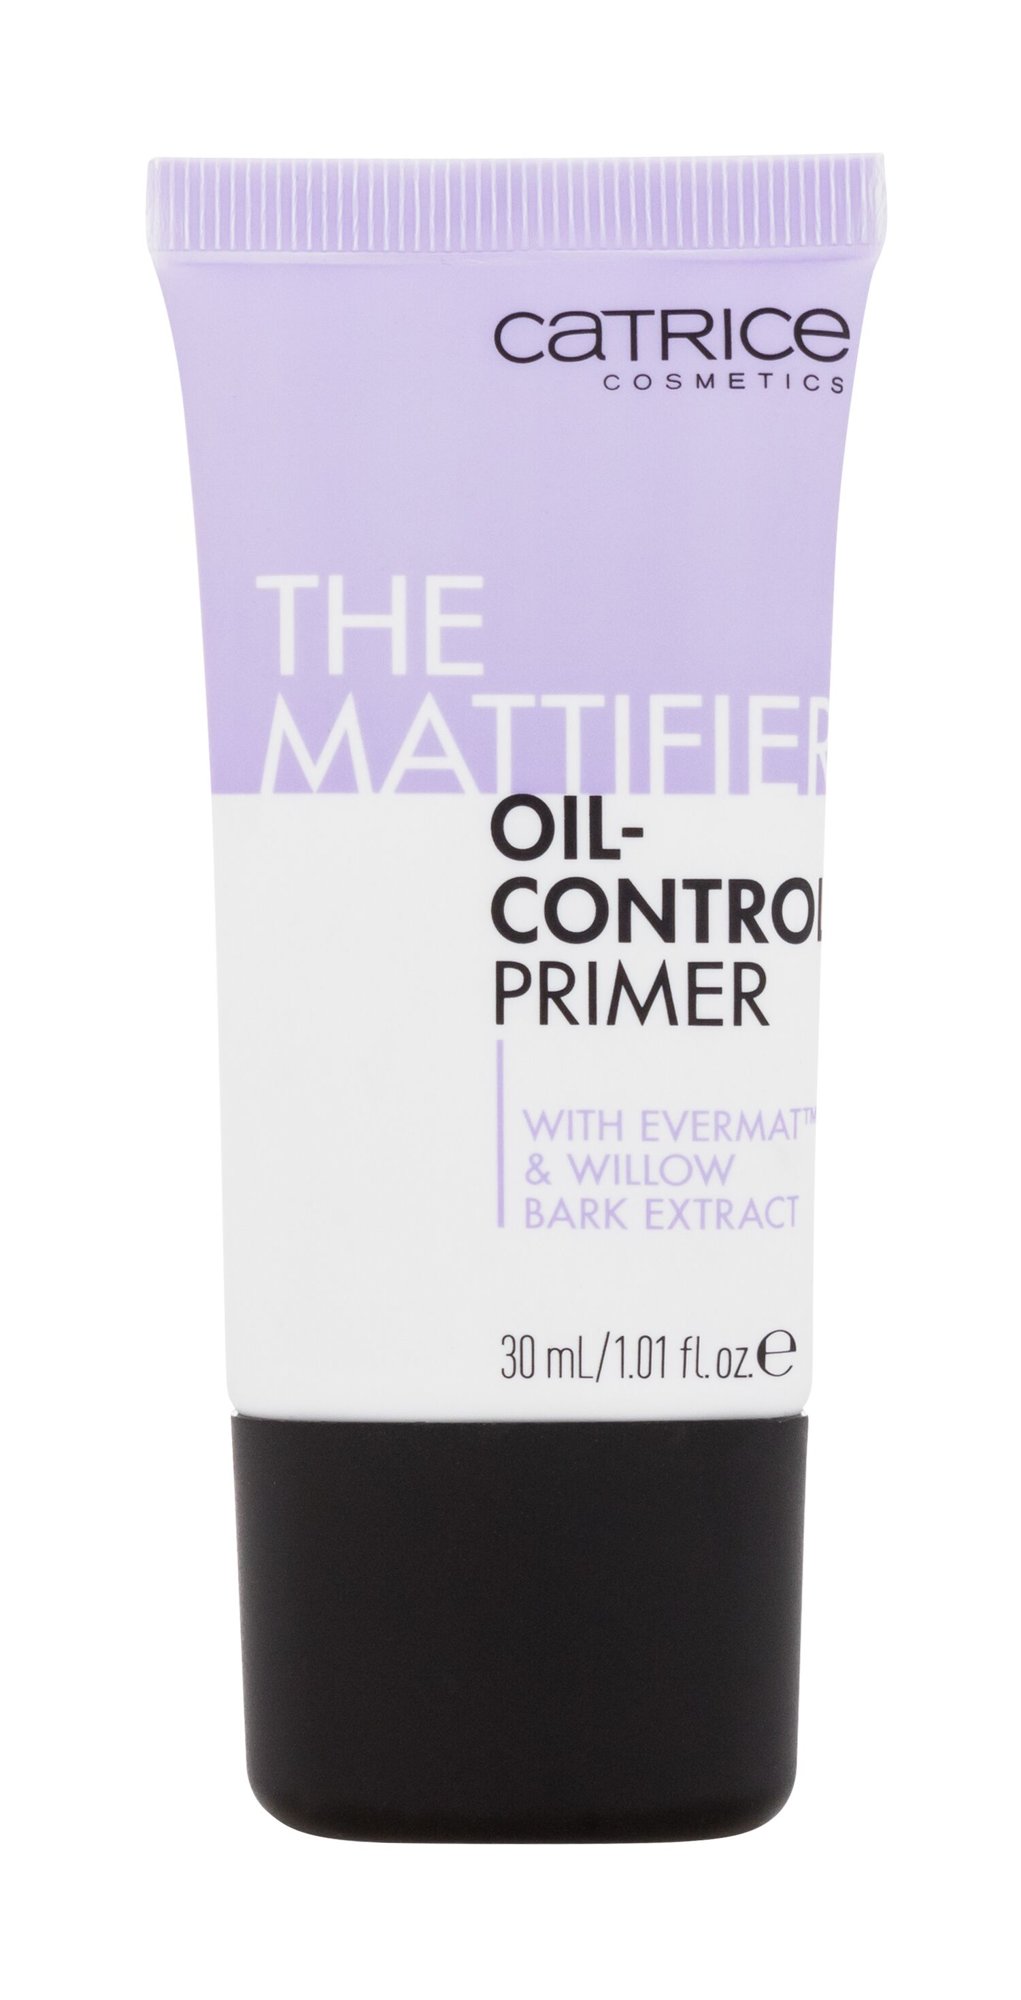 Catrice Oil-Control The Mattifier primeris